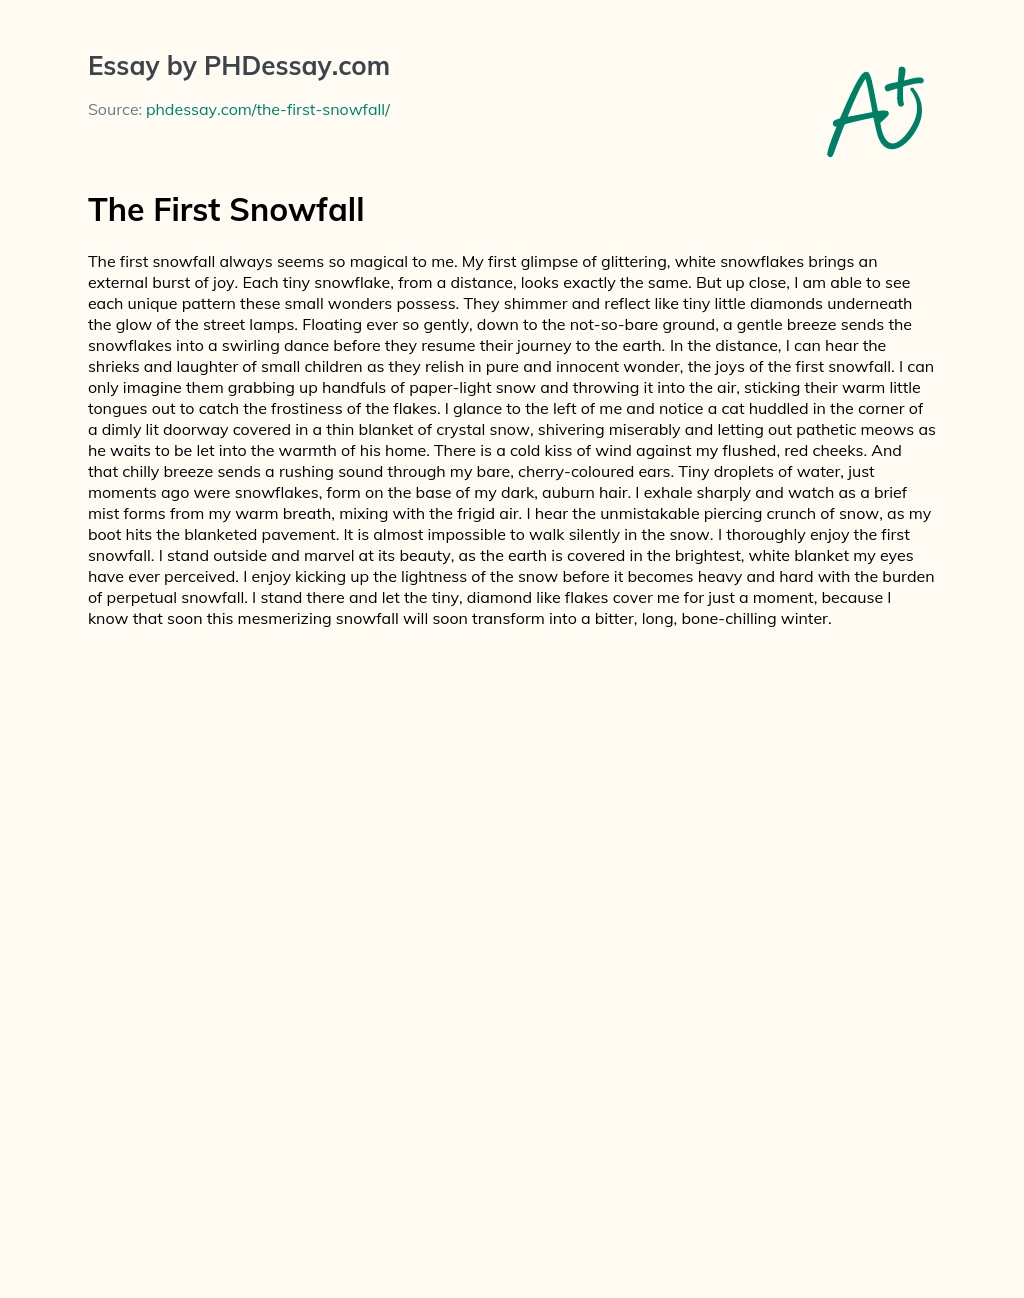 The First Snowfall essay